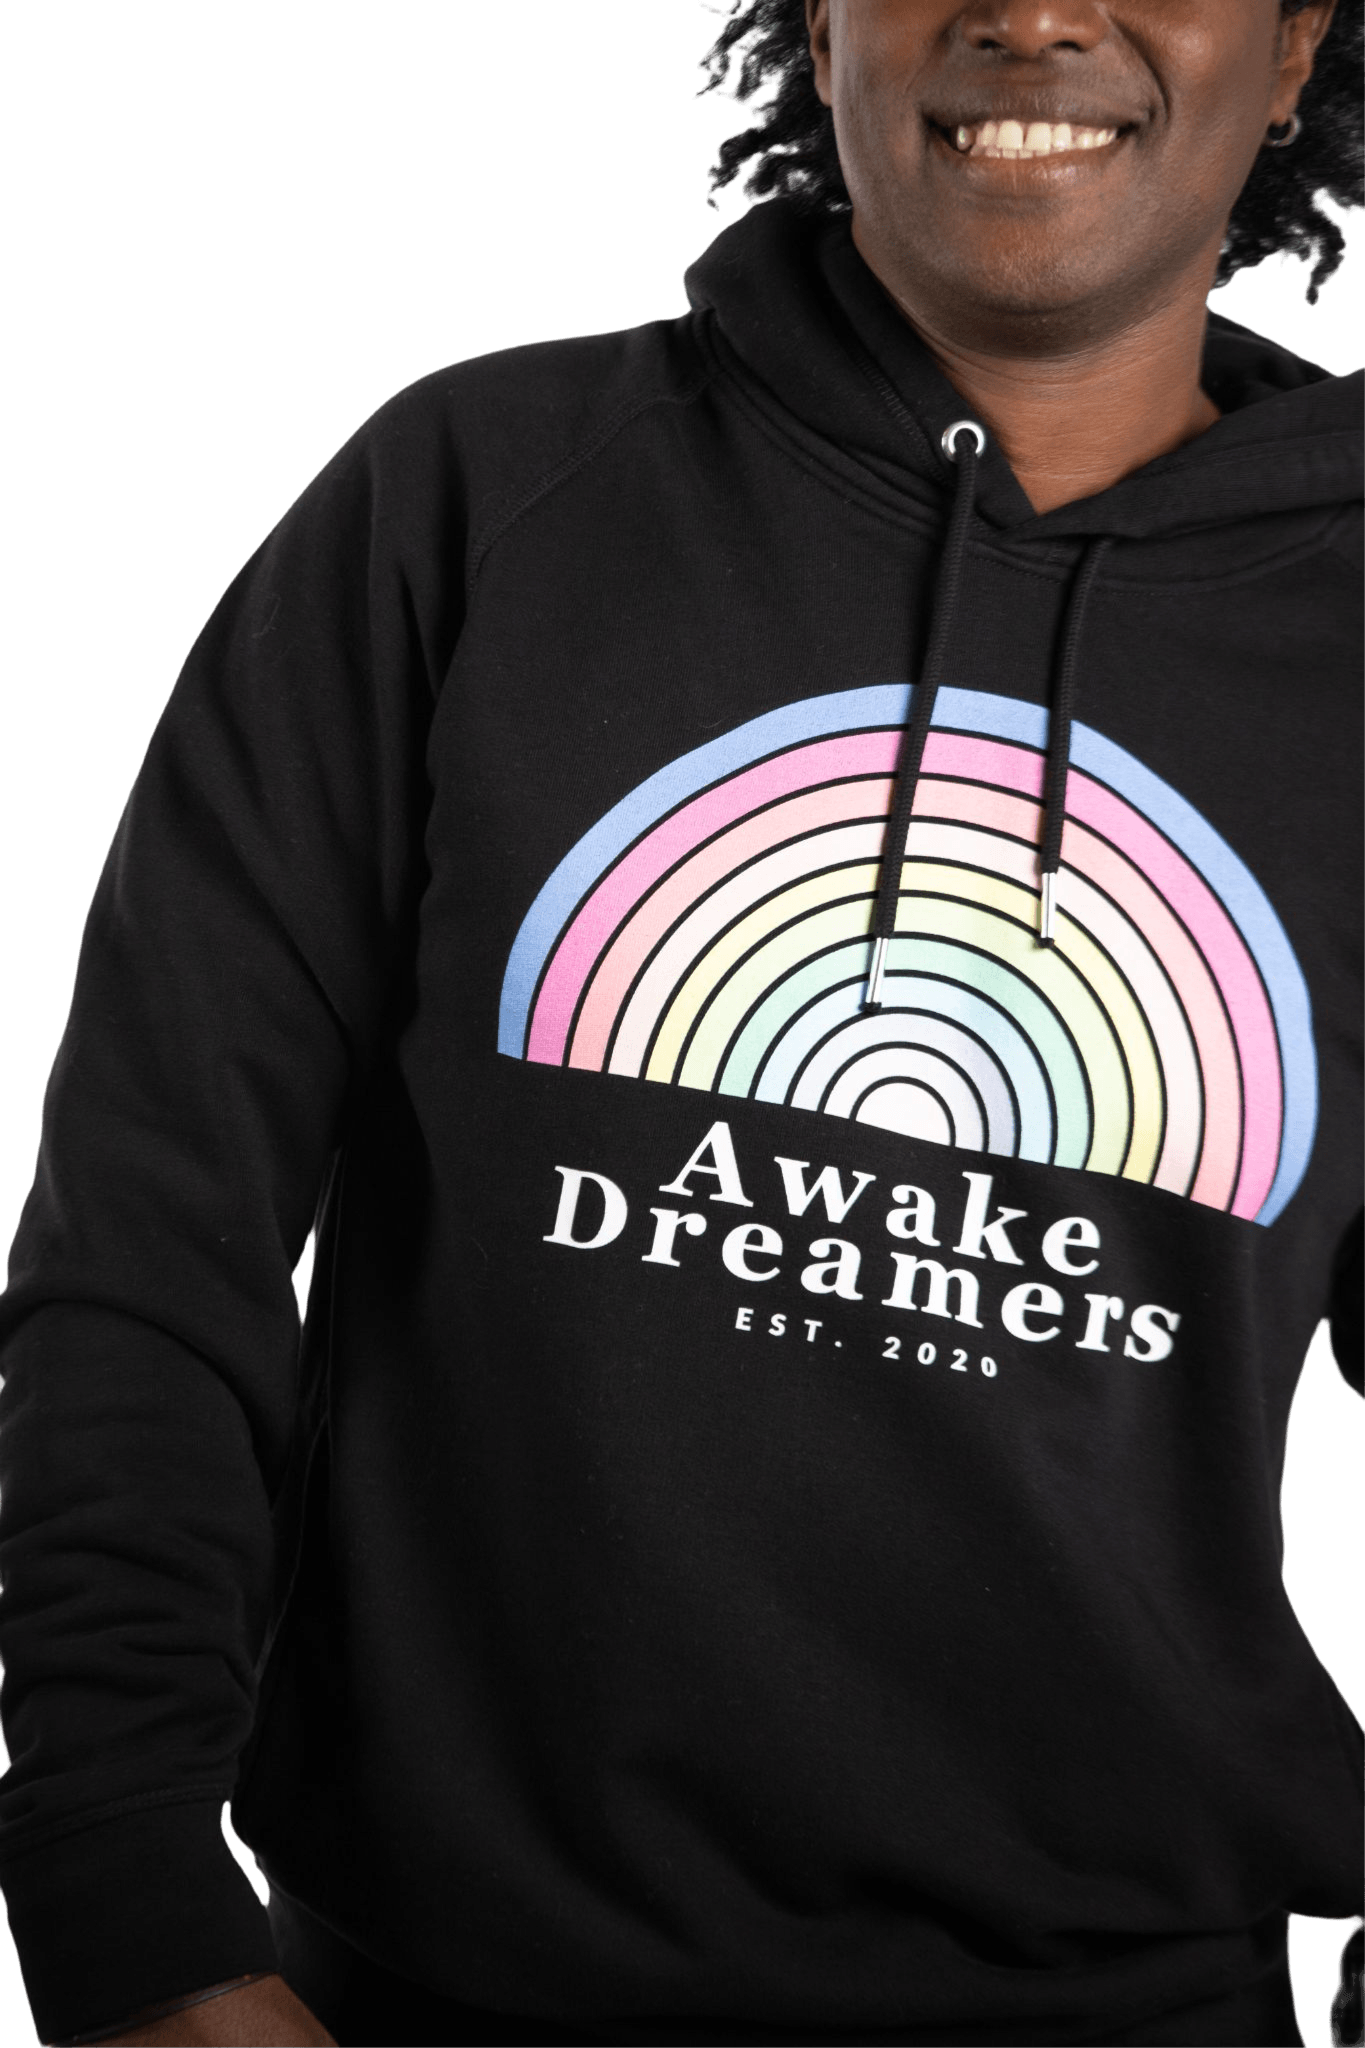 #Awake_Dreamers# - #premium_ethical_sustainable_organic_clothing#